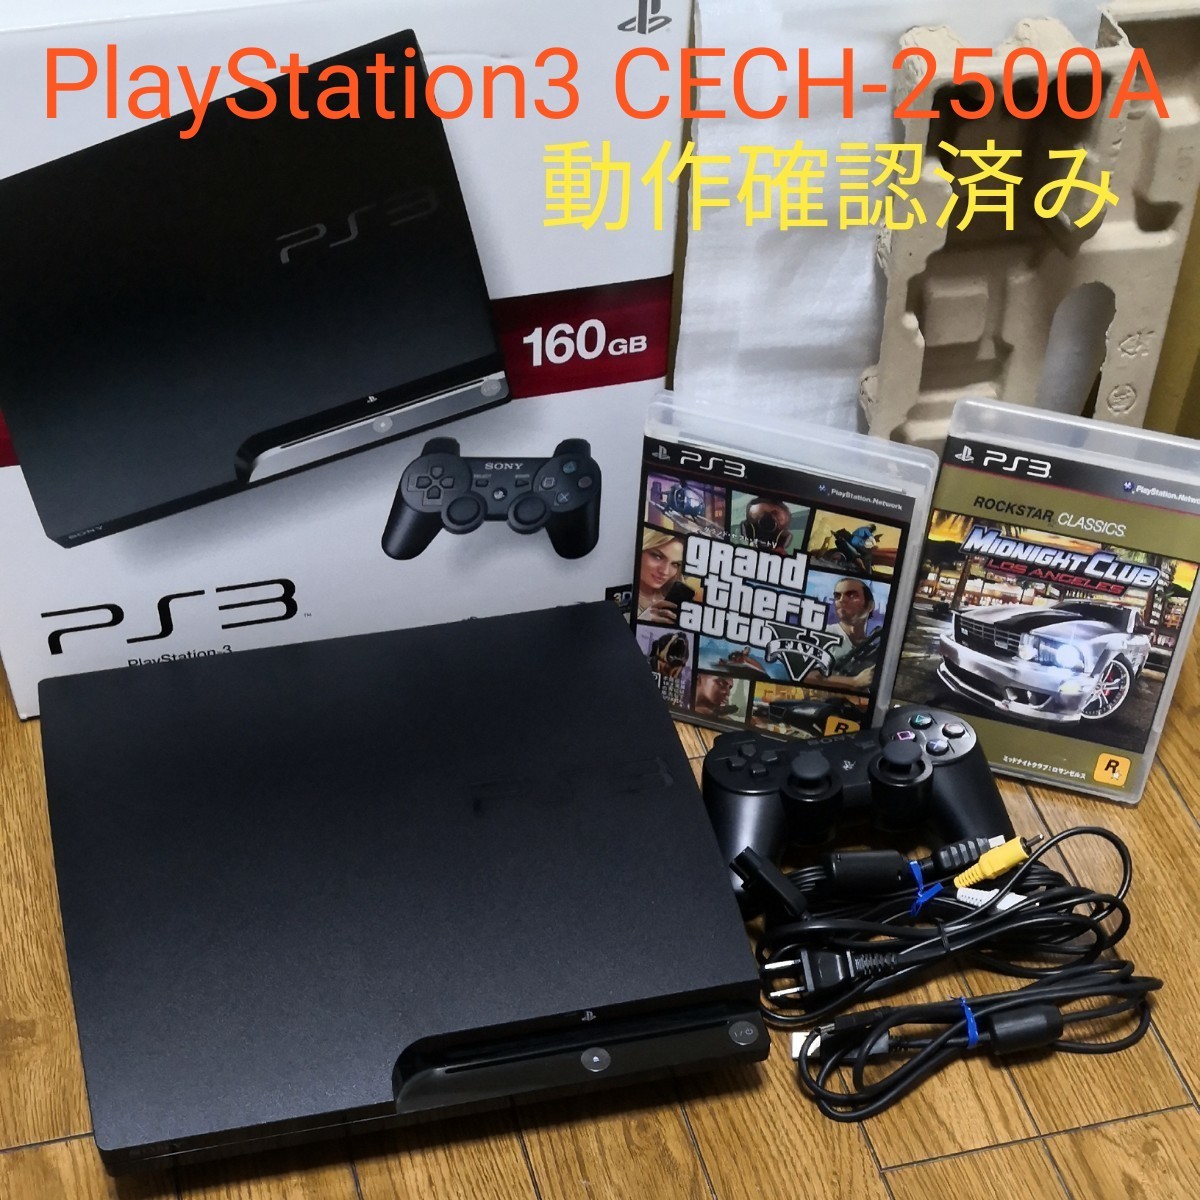 PlayStation3 CECH-2500A(160GB)ゲームソフト付属 